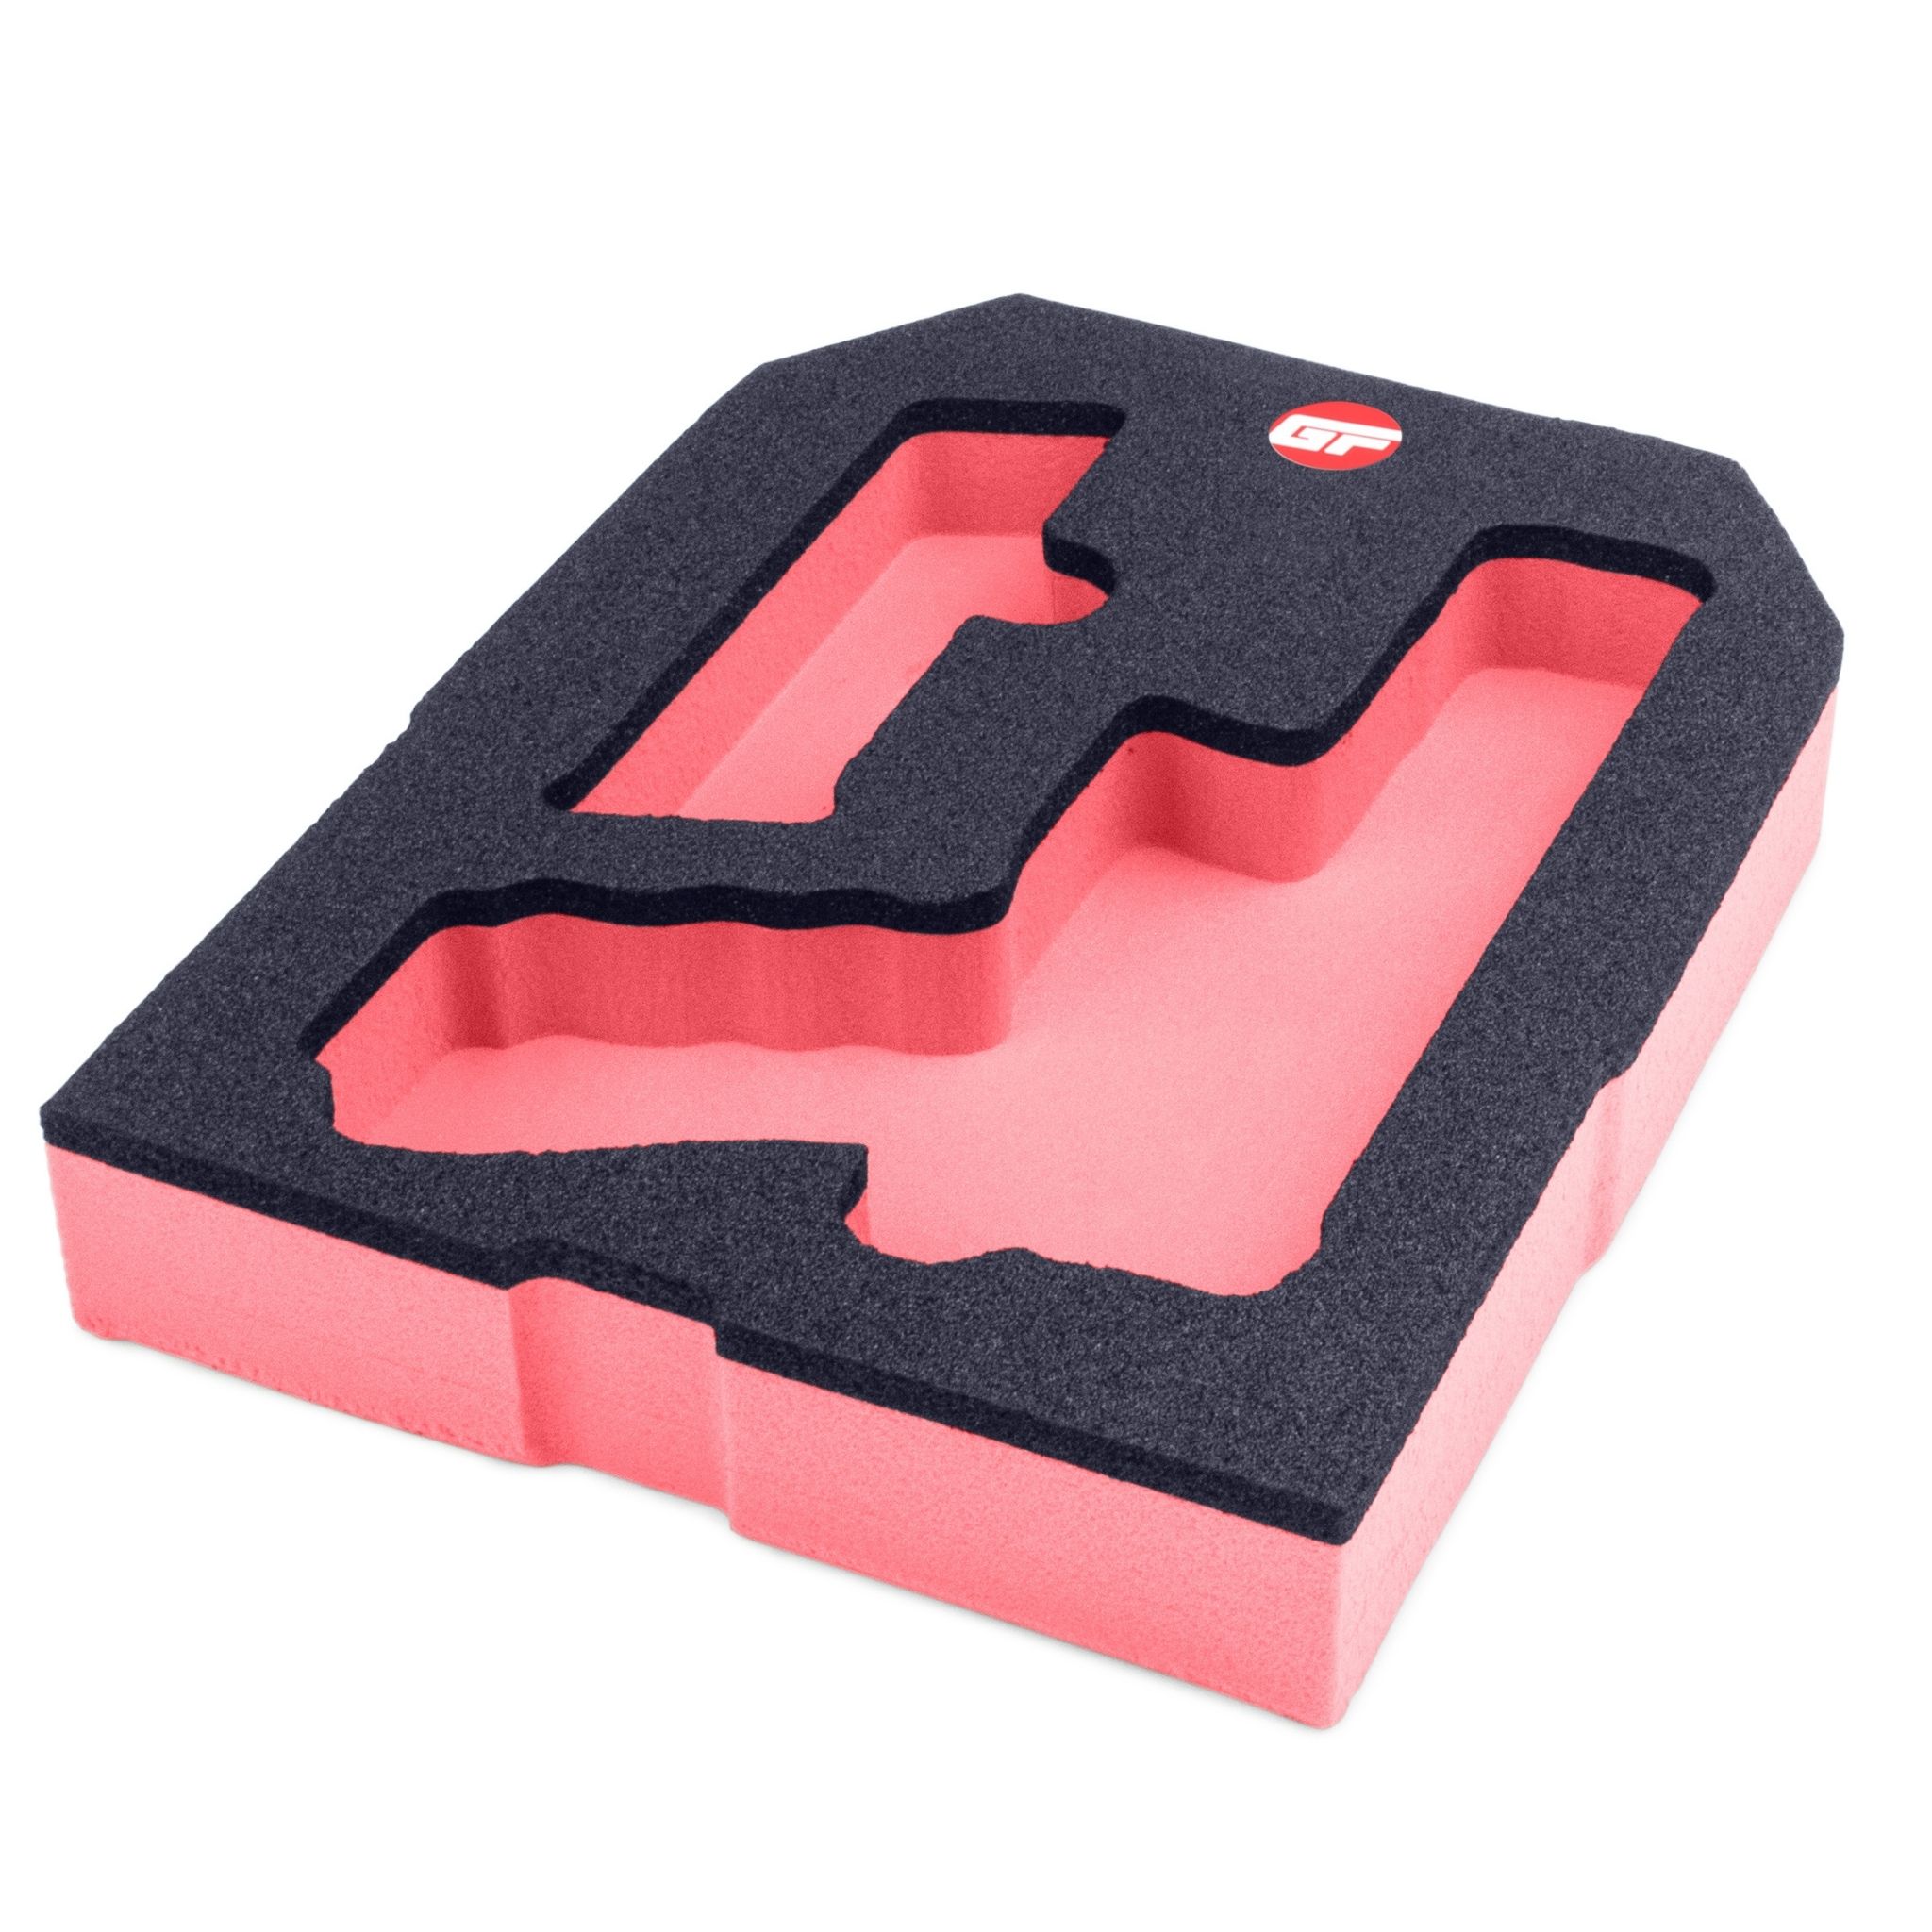 Lifepod 2.0 Foam Insert fits Glock 17 (Red)